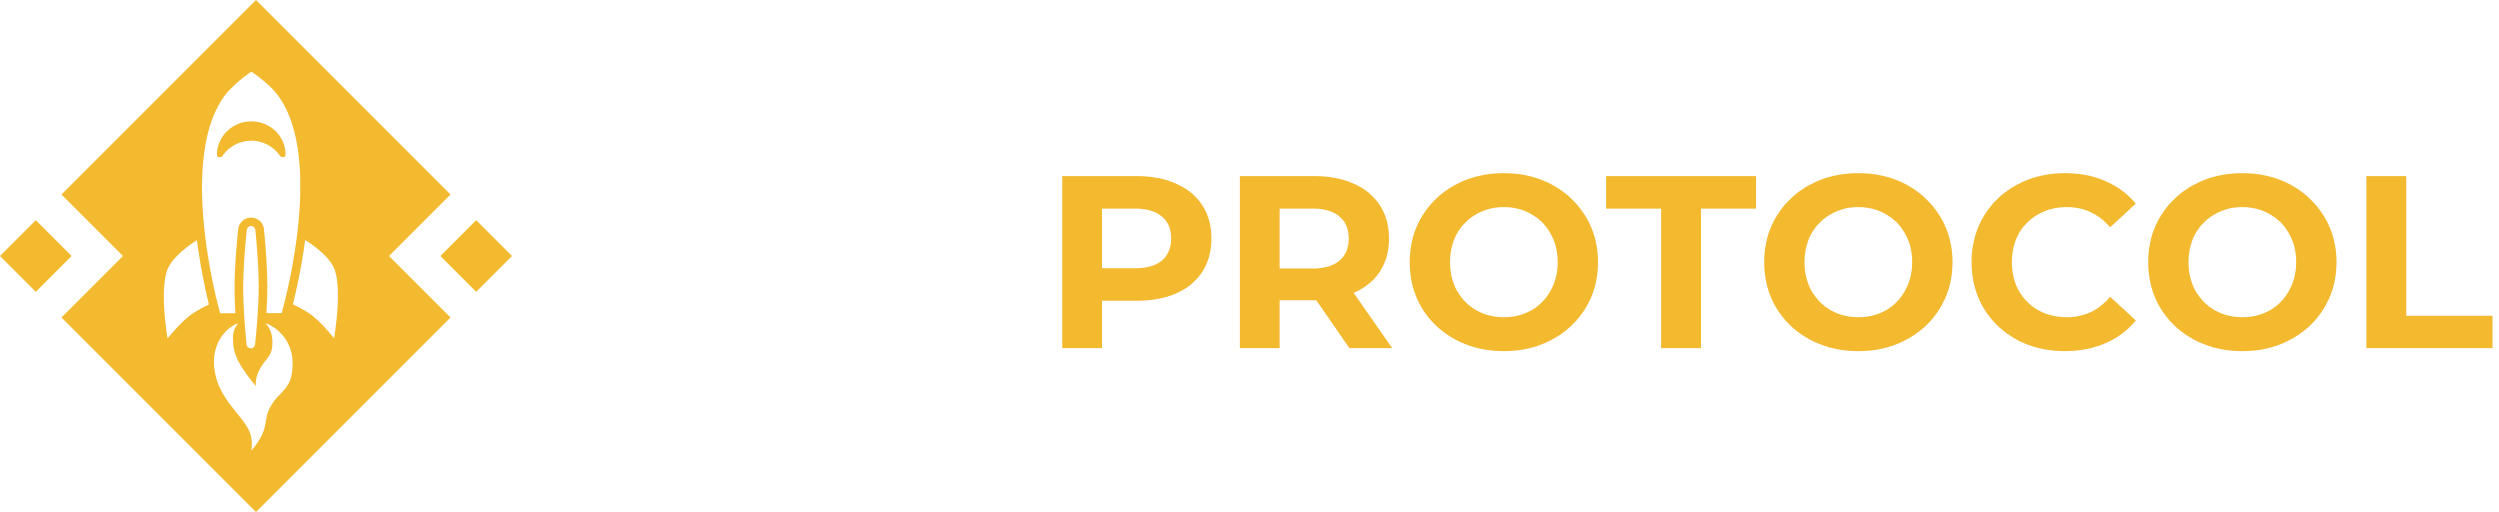 logologo-GT-Protocol-version1-blackFalse.png